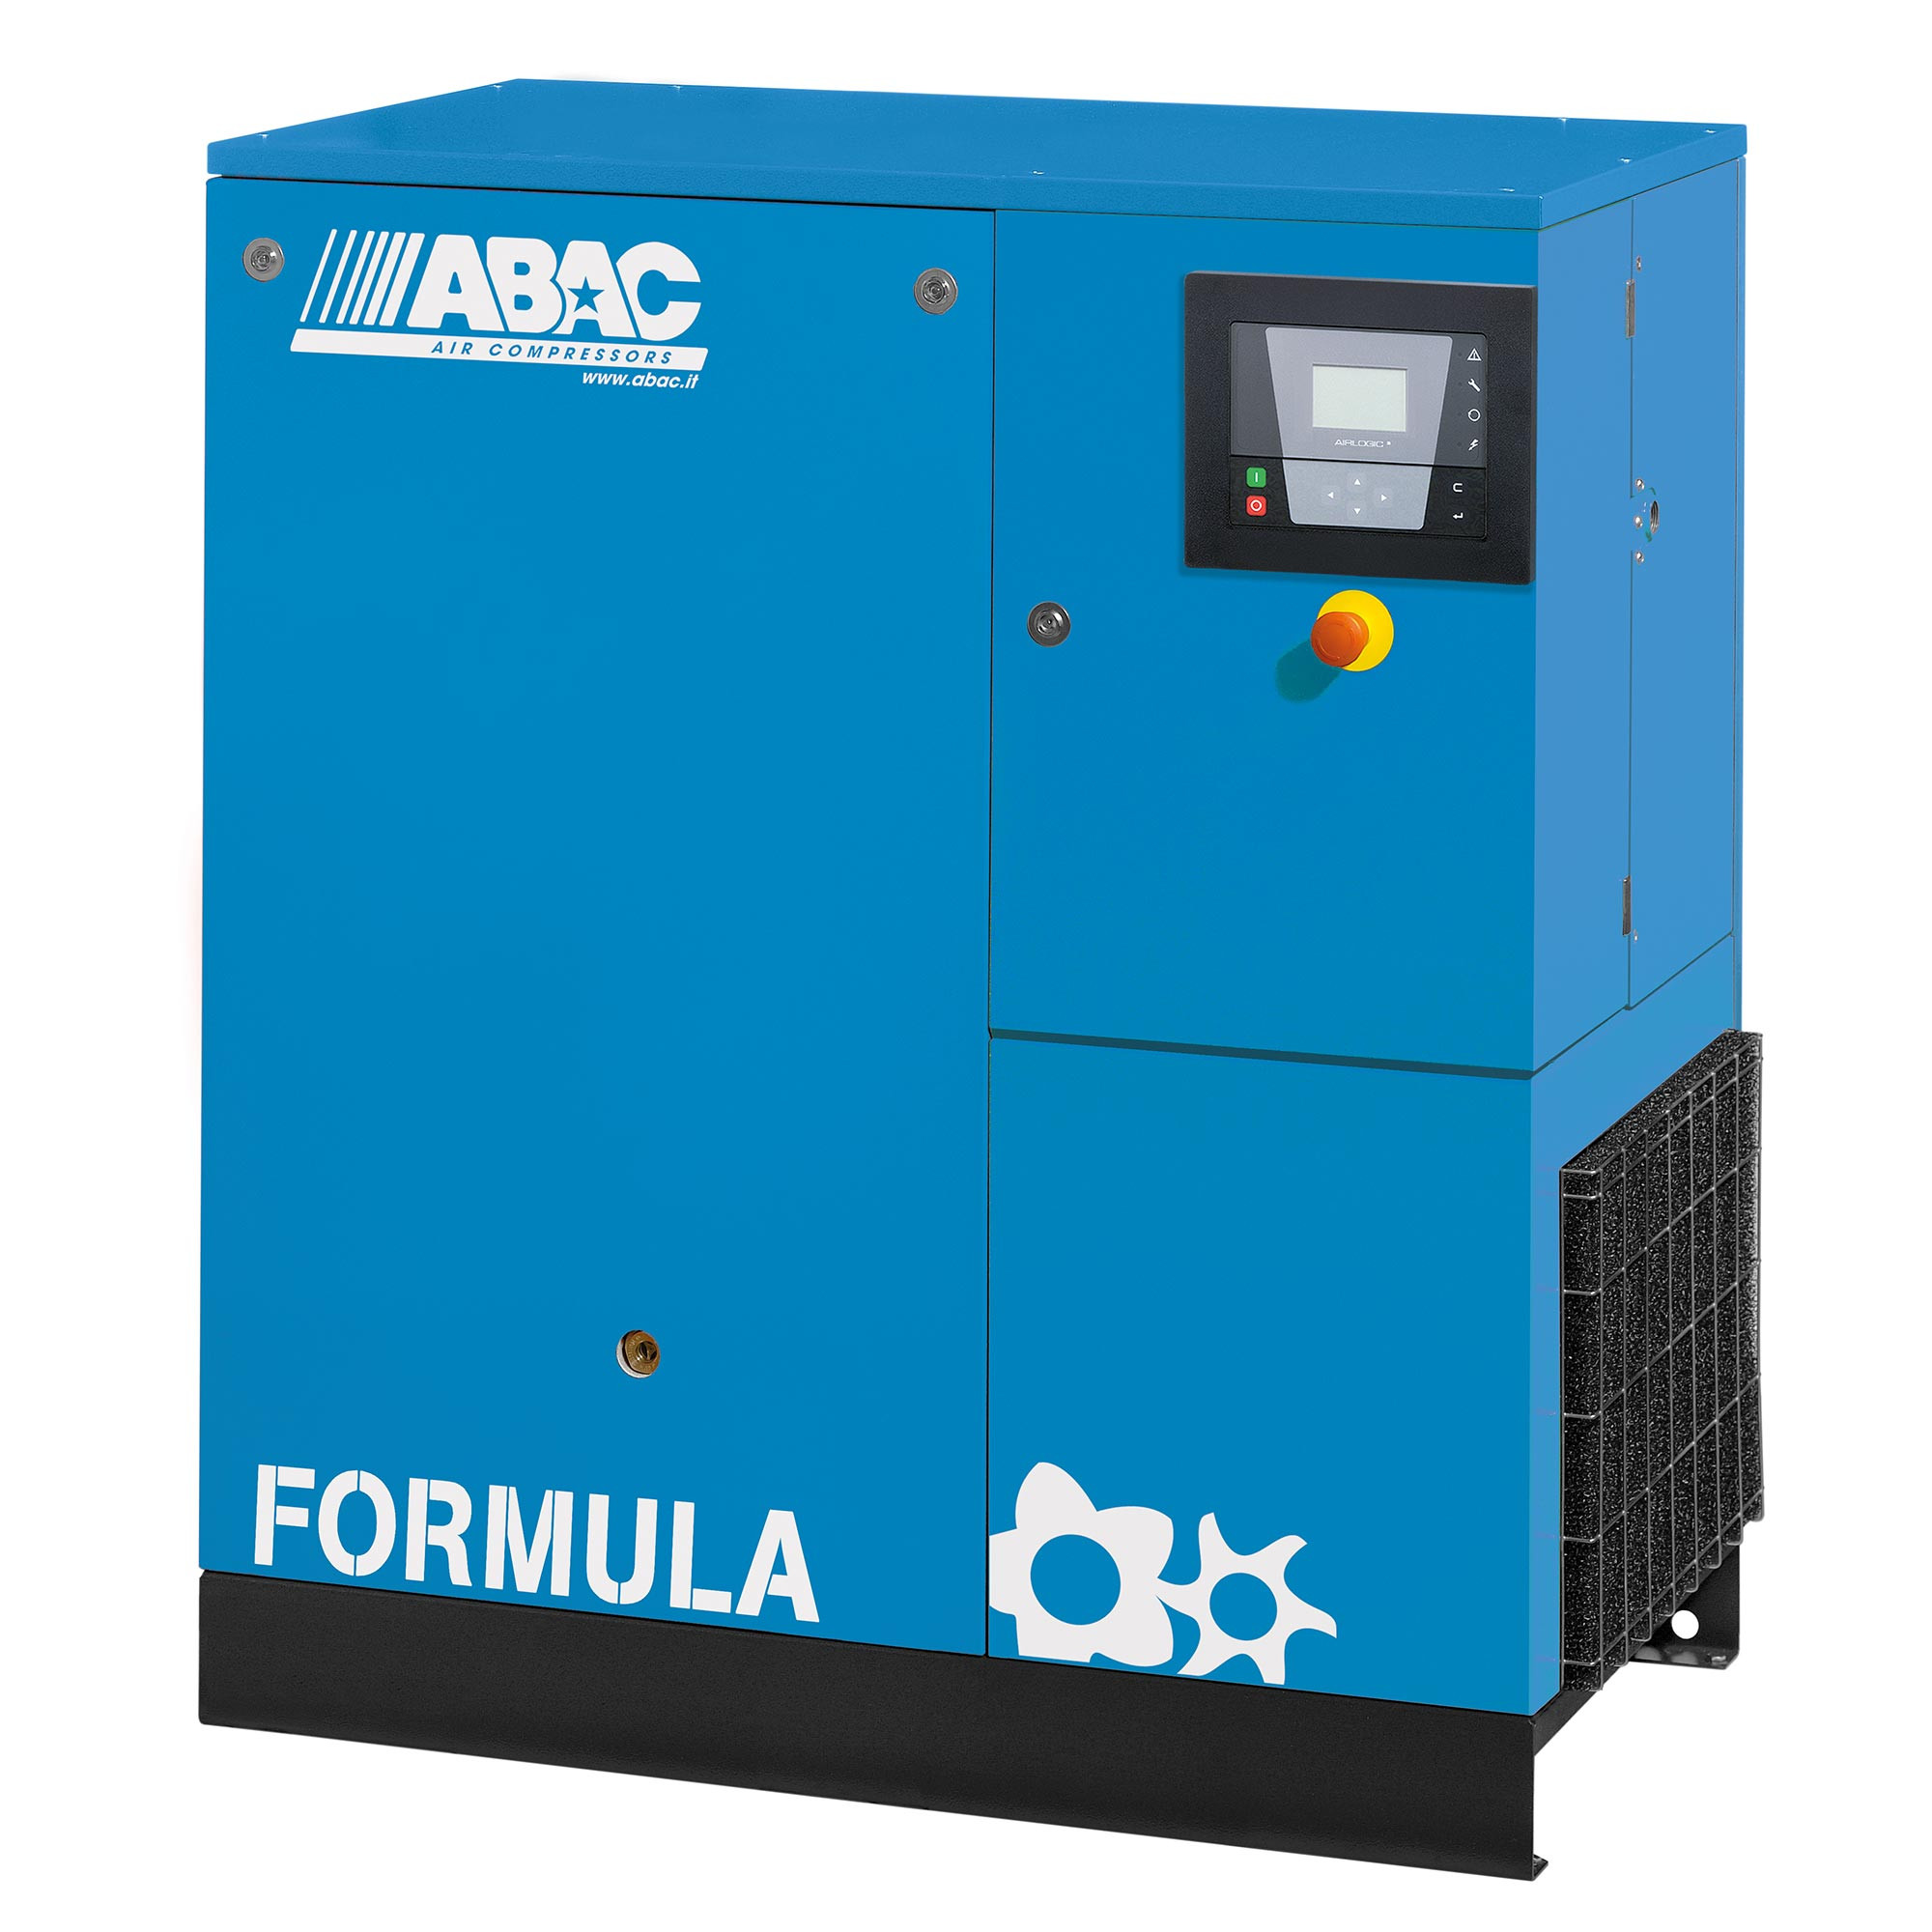 ABAC公式11千瓦固定速度旋转螺杆空气压缩机,基本单位58.5 CFM